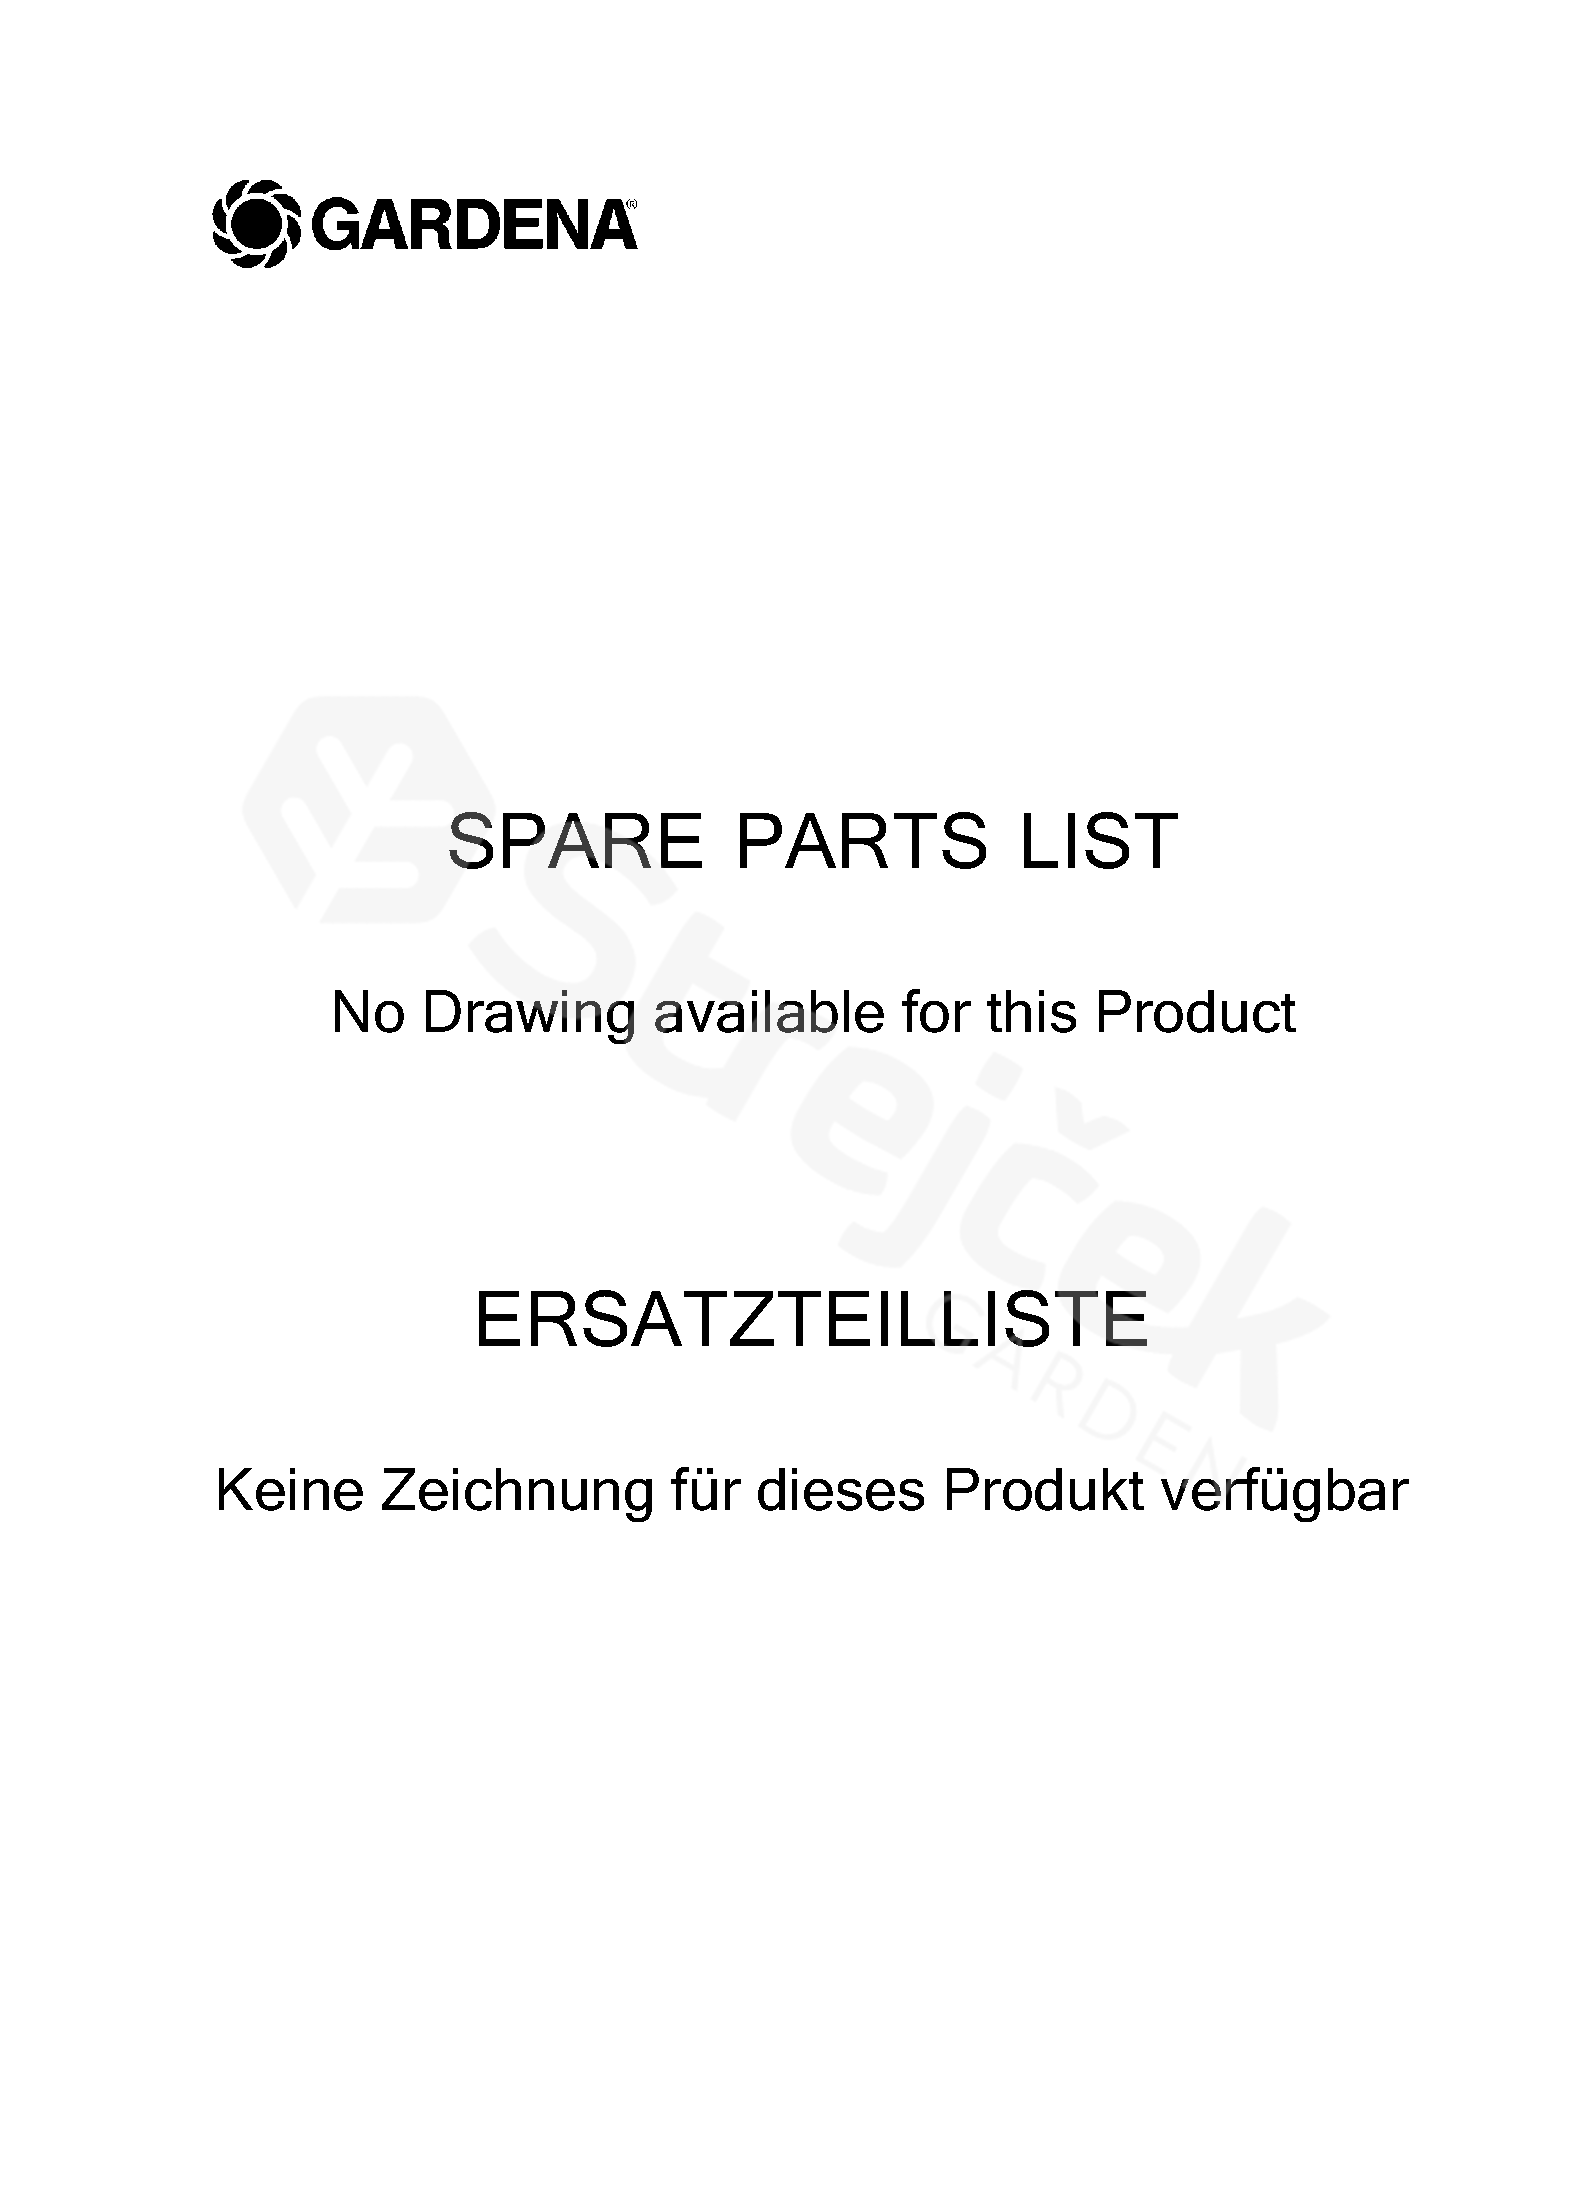 Spare Parts Partlist Aquazoom 350 T Aquazoom 350 T 1979 Until 11 Product Complete Sgarden Cz